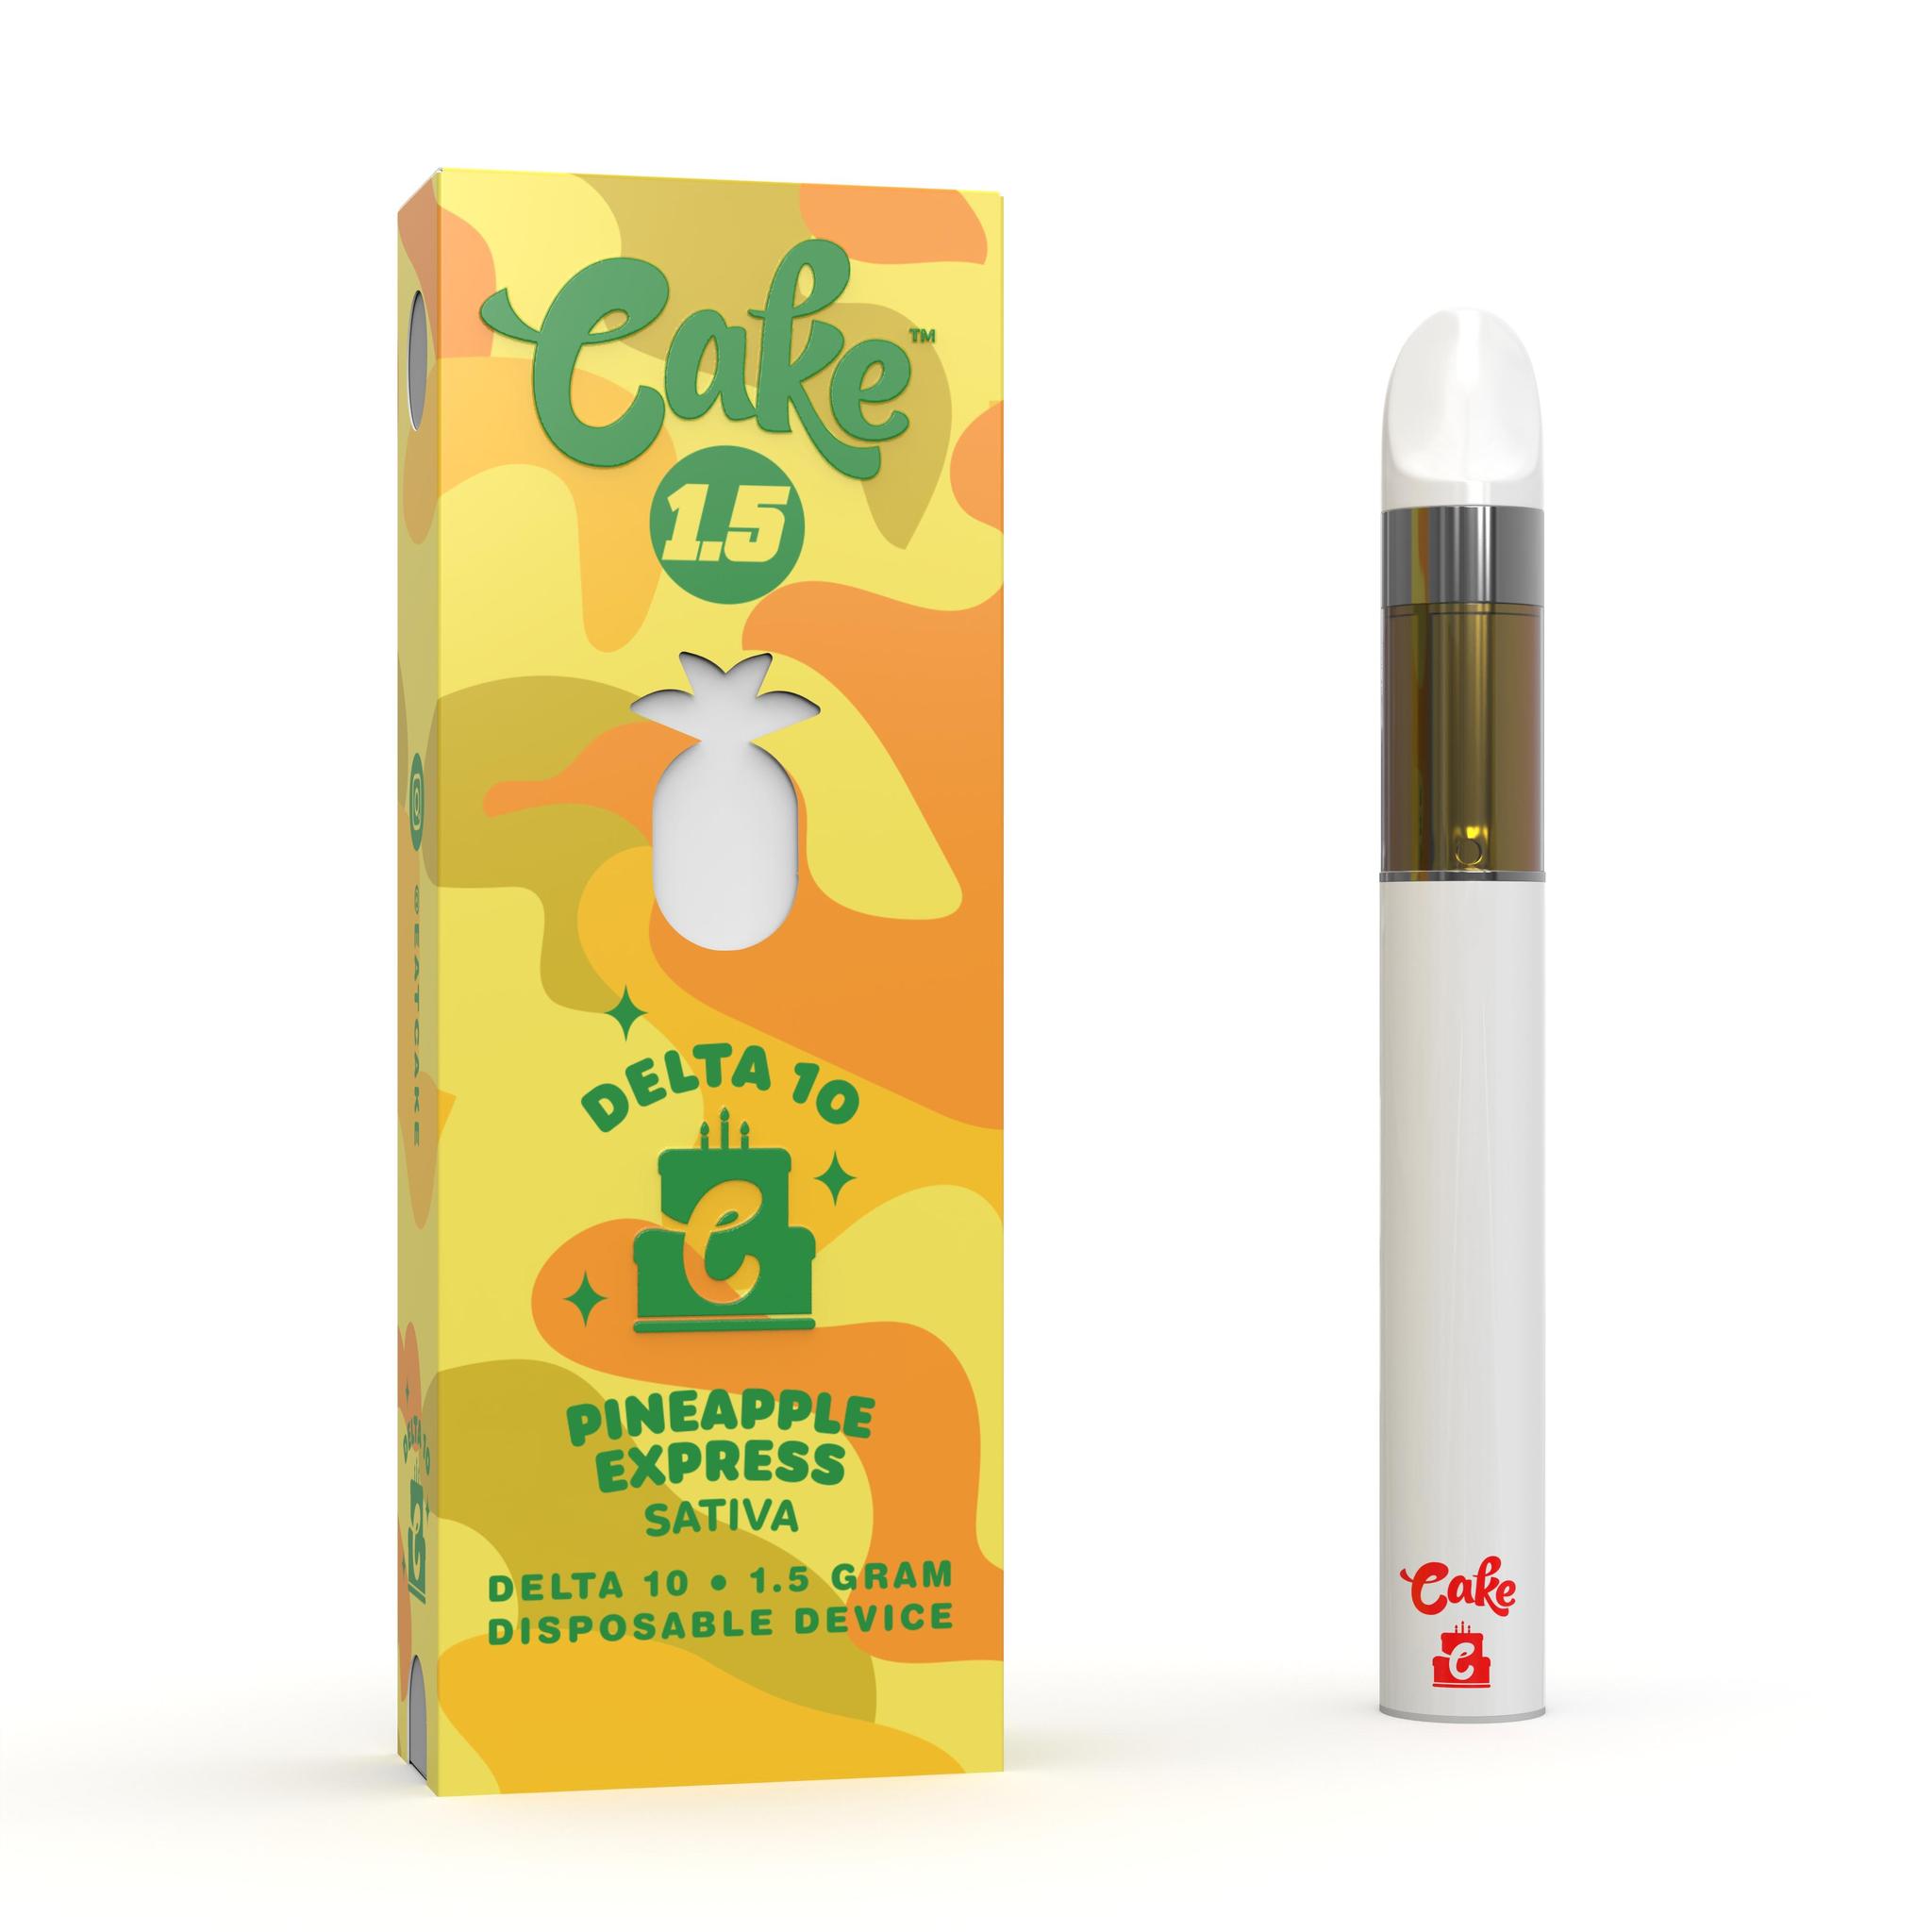 Cake Delta 10 “Pineapple Express” Disposable Vape